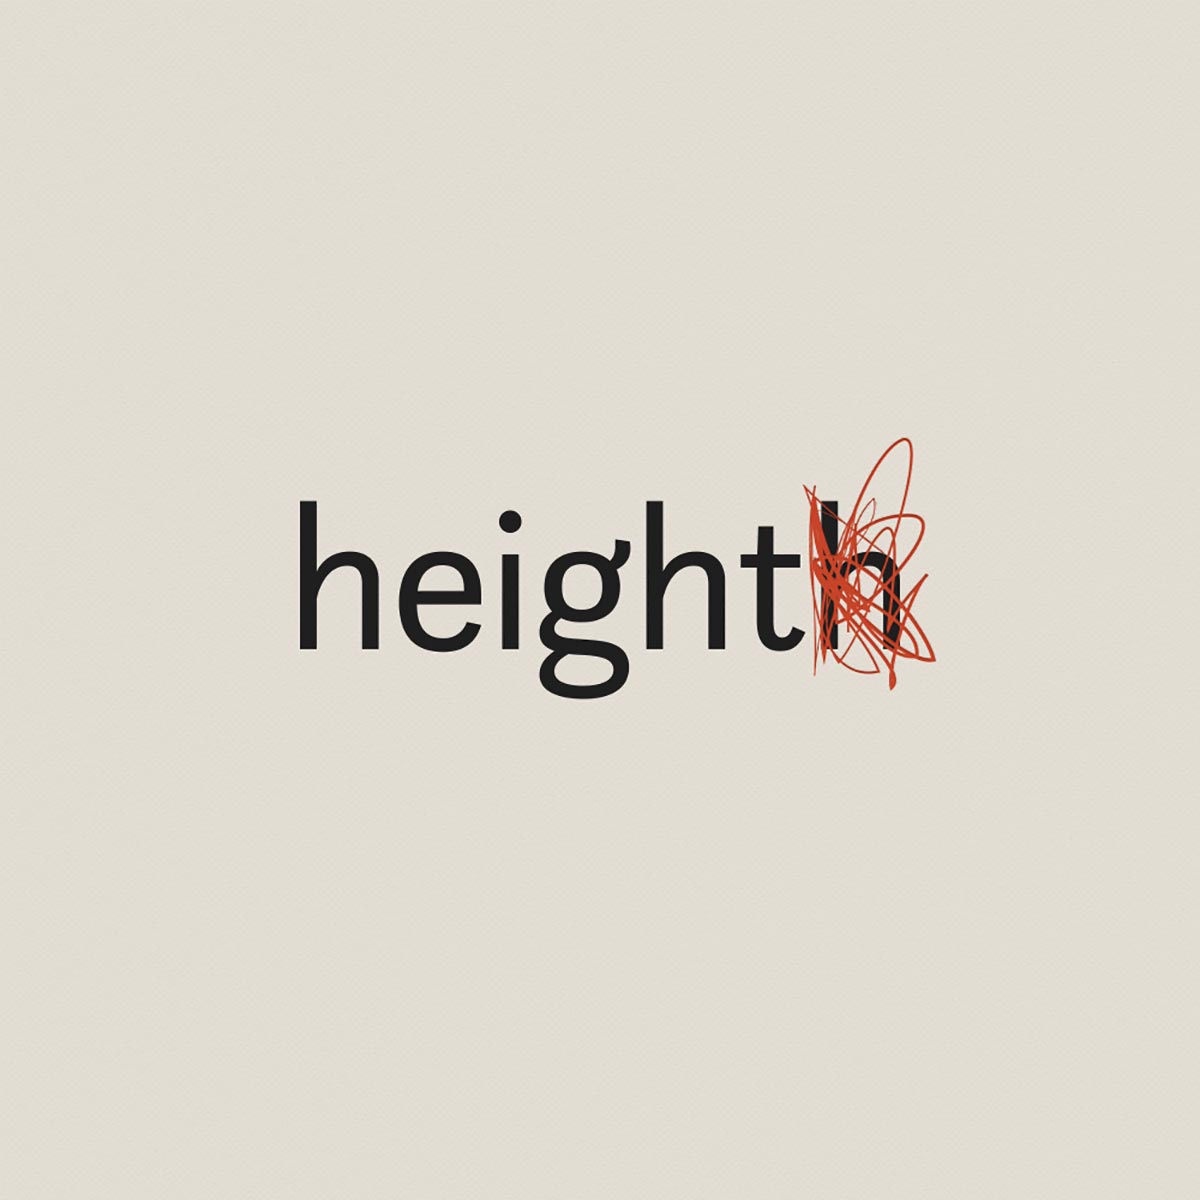 heighth